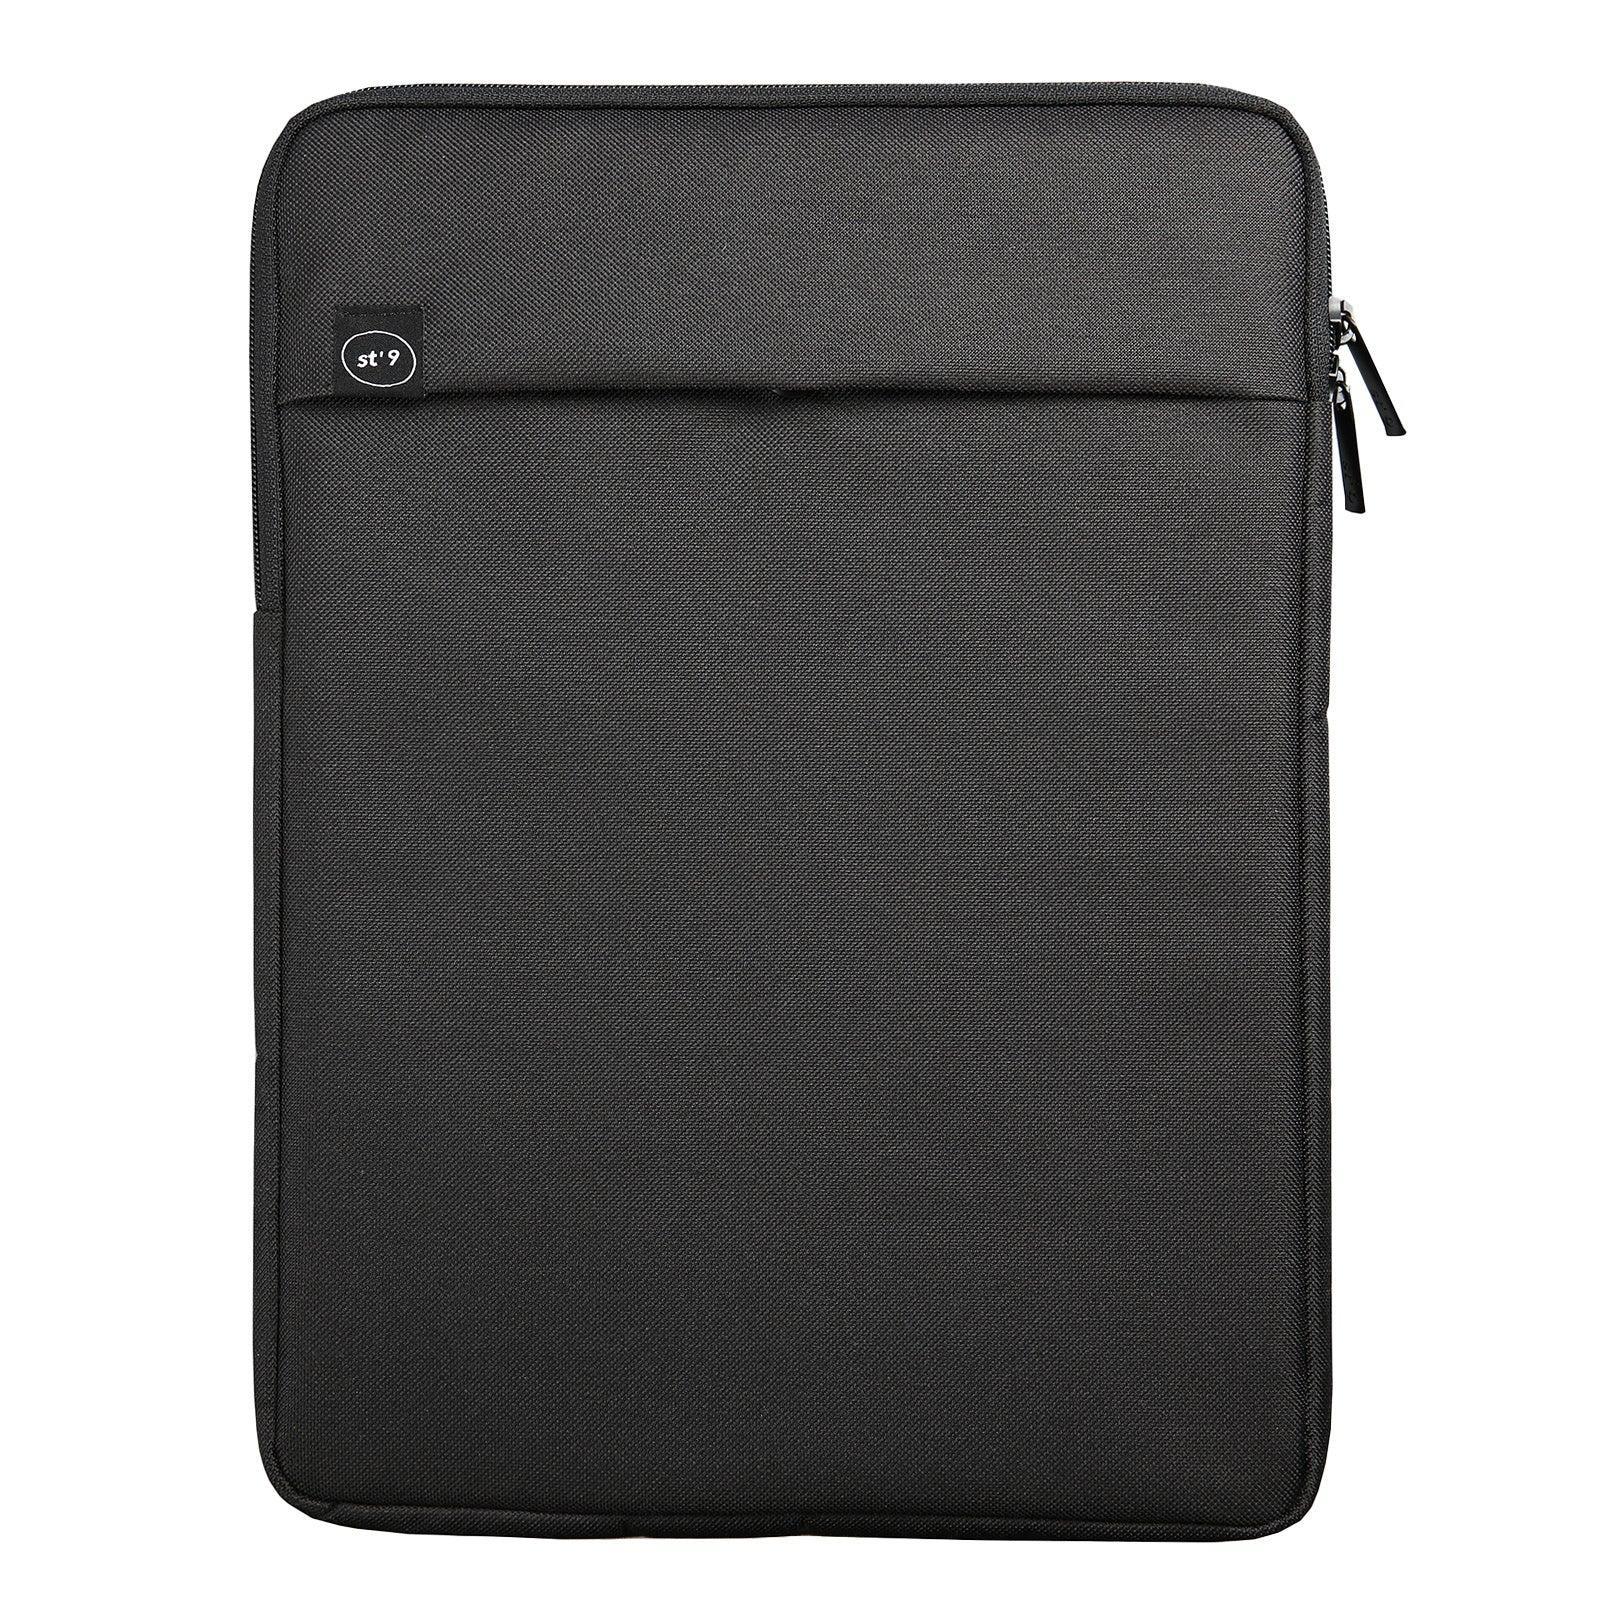 St'9 Xl Size 15.6/16 Inch Black Laptop Sleeve Padded Travel Carry Case Bag Luke